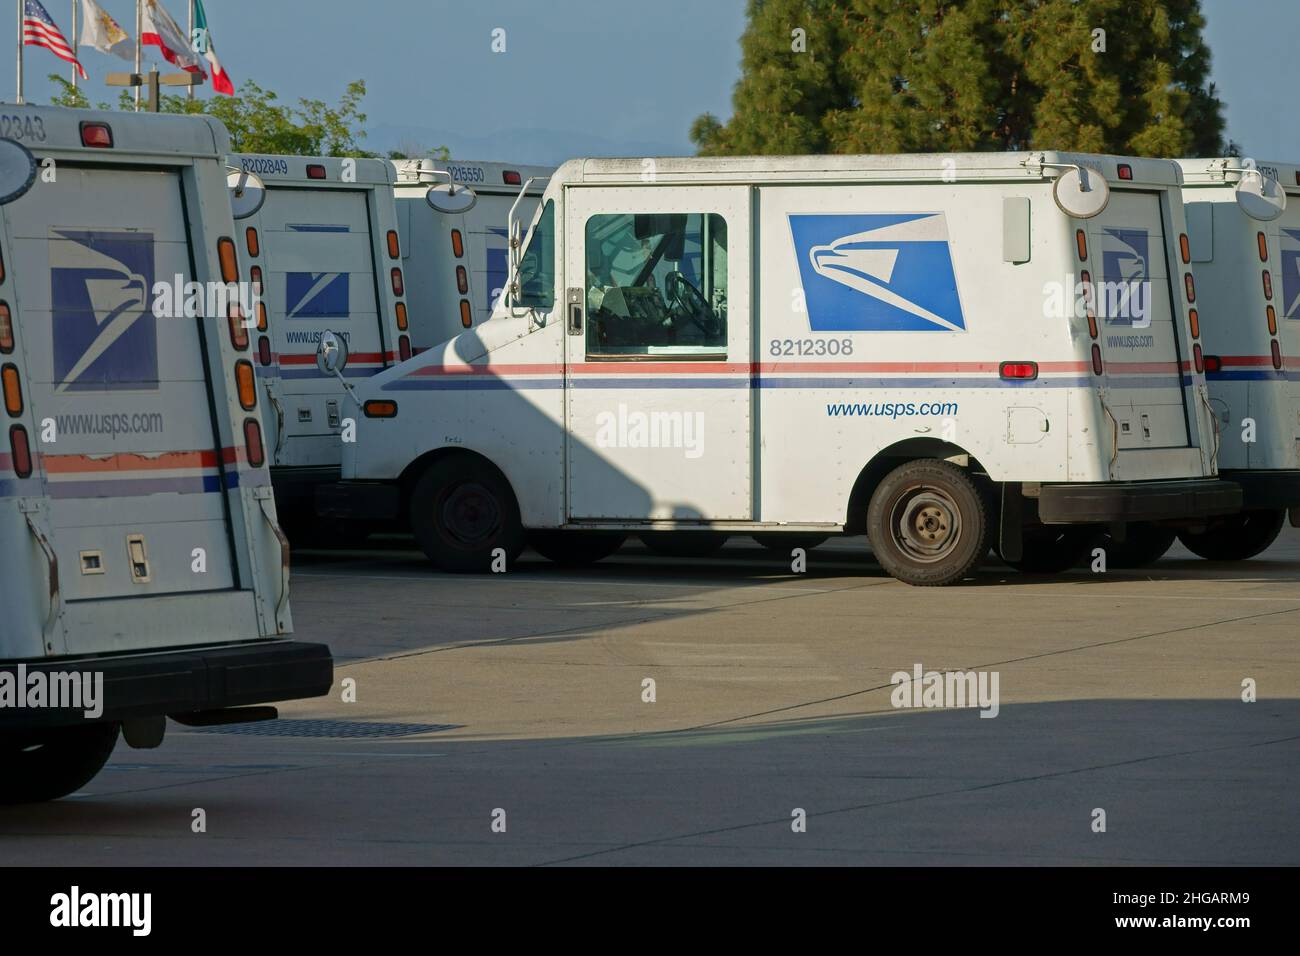 Monterey, CA / USA - 3 aprile 2021: Vengono mostrati i camion postali Grumman LLV (Long Life Vehicle), gestiti dal Servizio postale degli Stati Uniti (USPS). Foto Stock